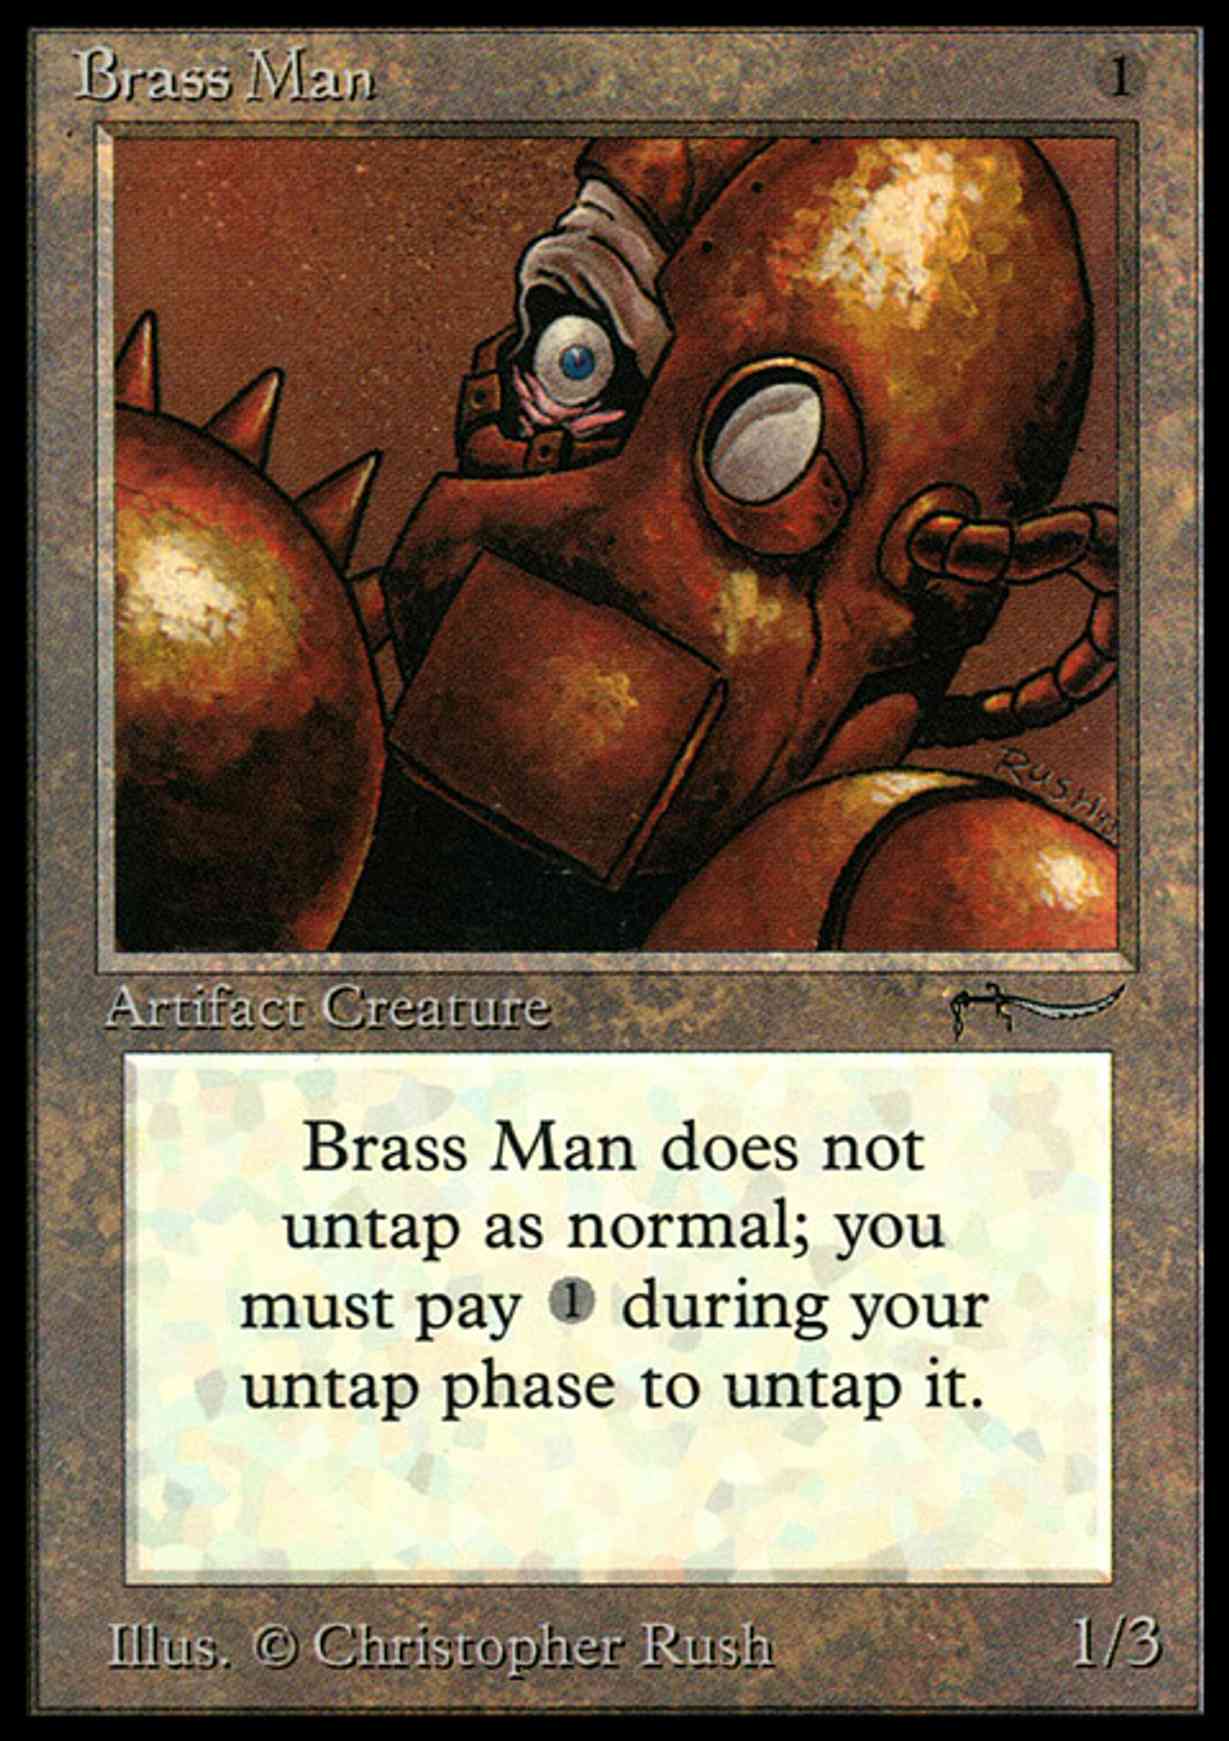 Brass Man magic card front